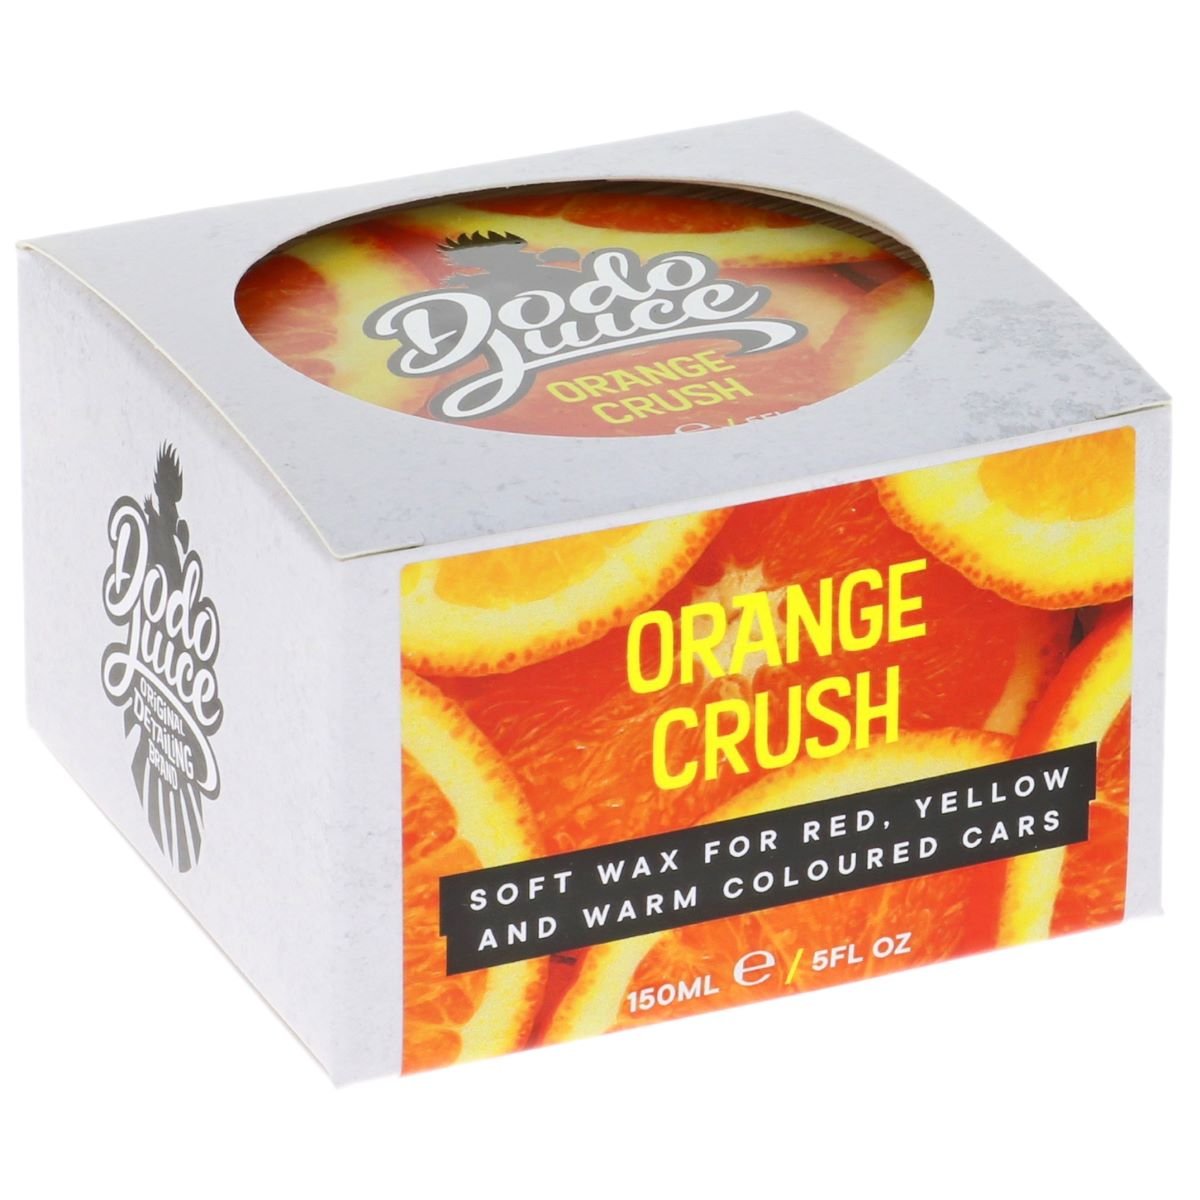 Orange Crush soft wax for warm coloured cars - 150ml